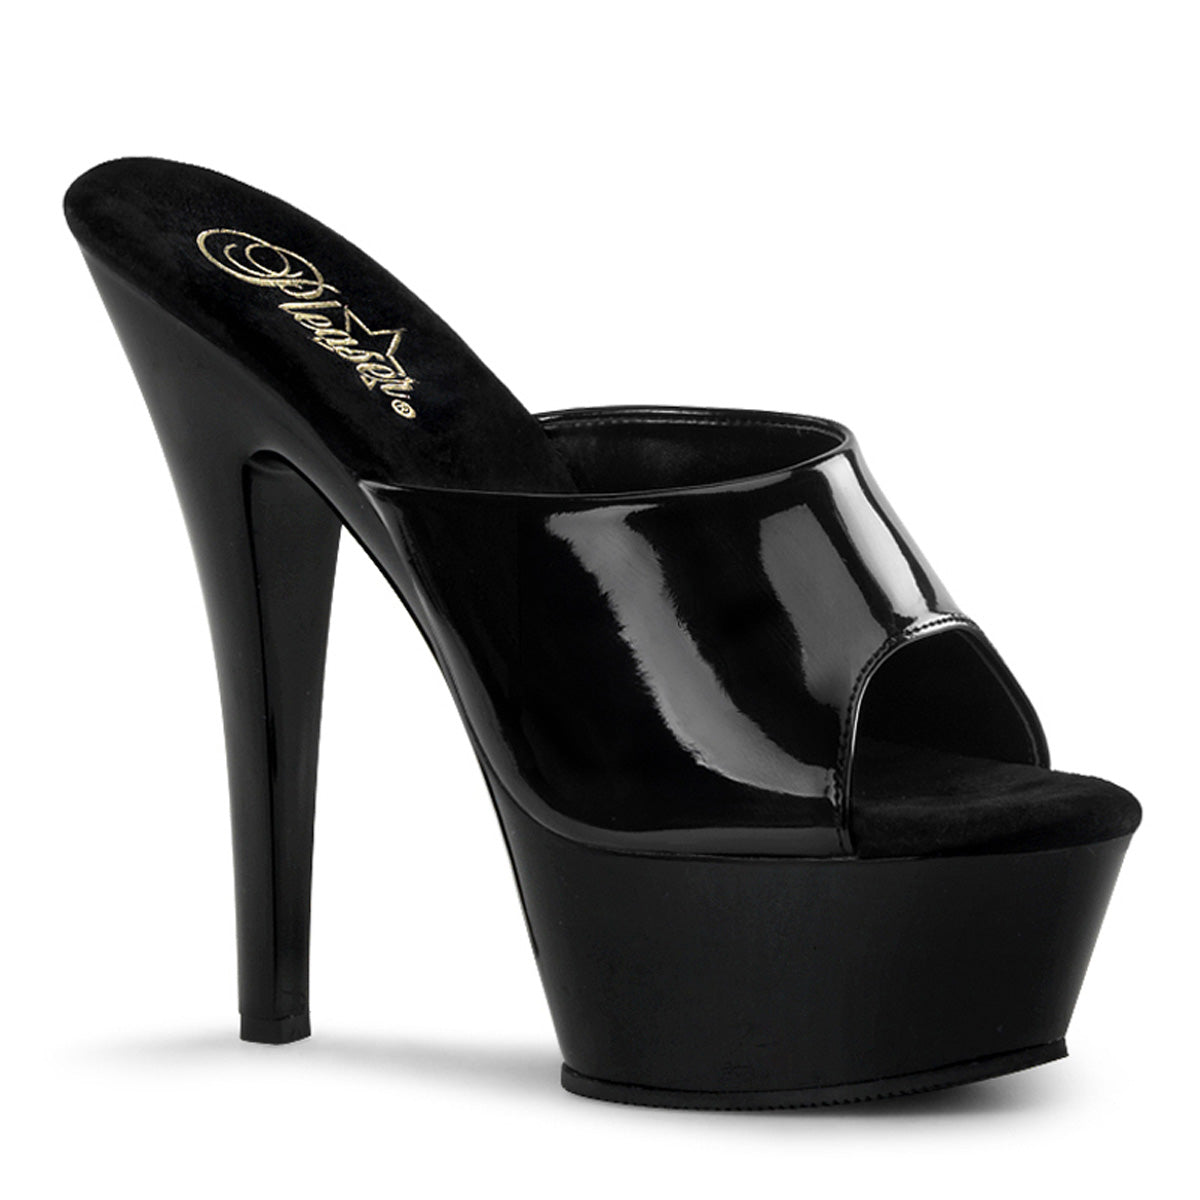 KISS-201 Pleaser 6" Heel Black Patent  Stripper Platforms High Heels